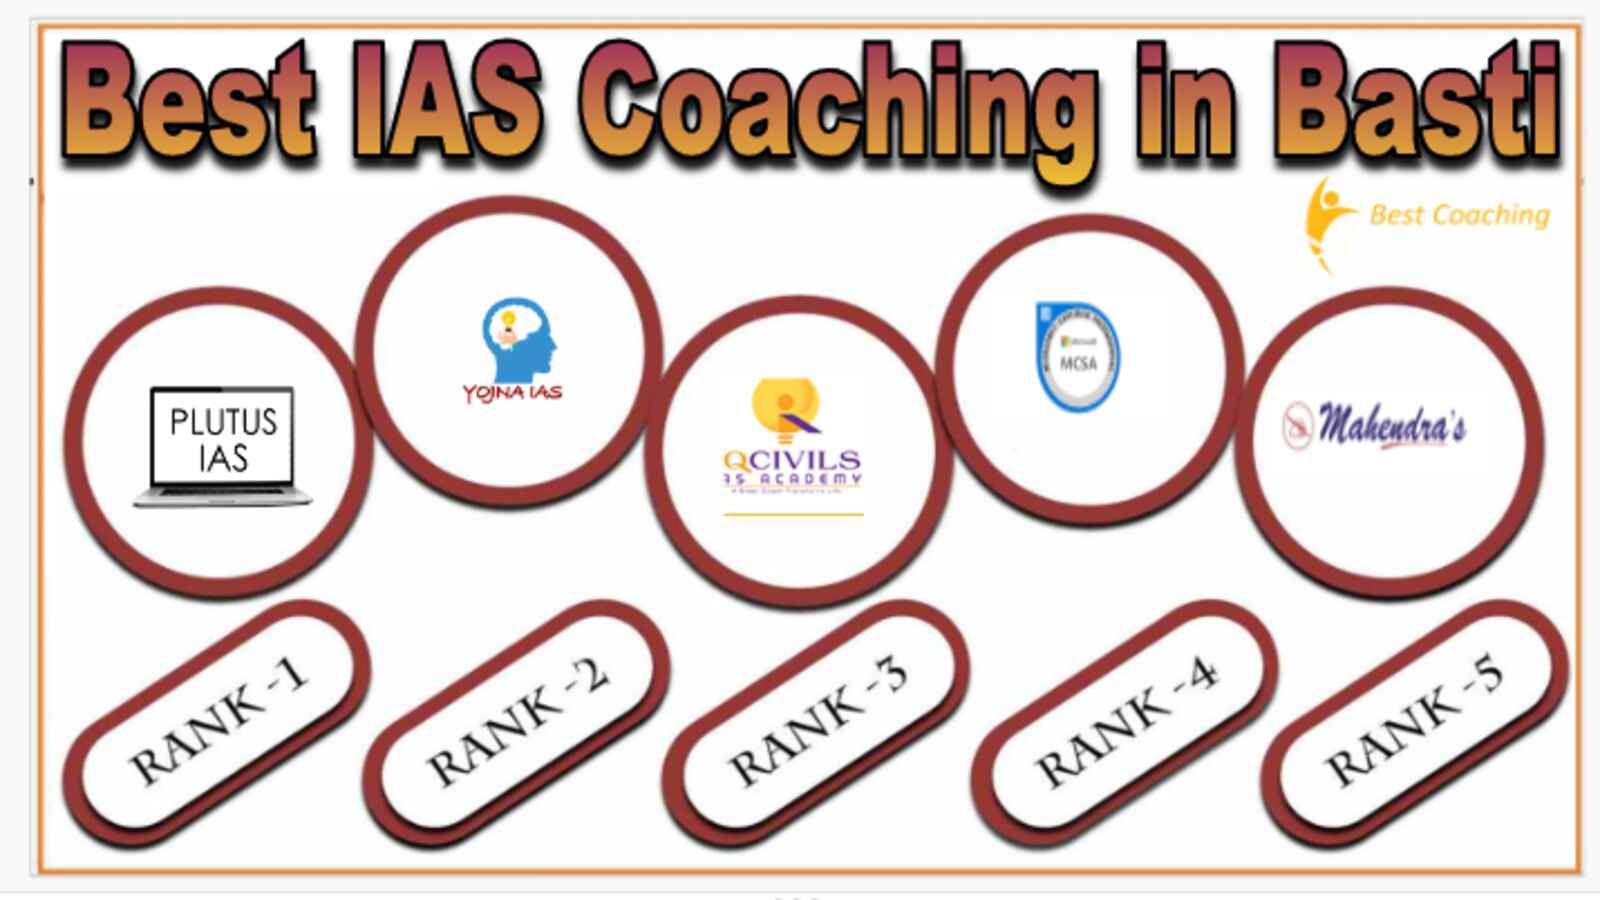 Best IAS Coaching in Basti